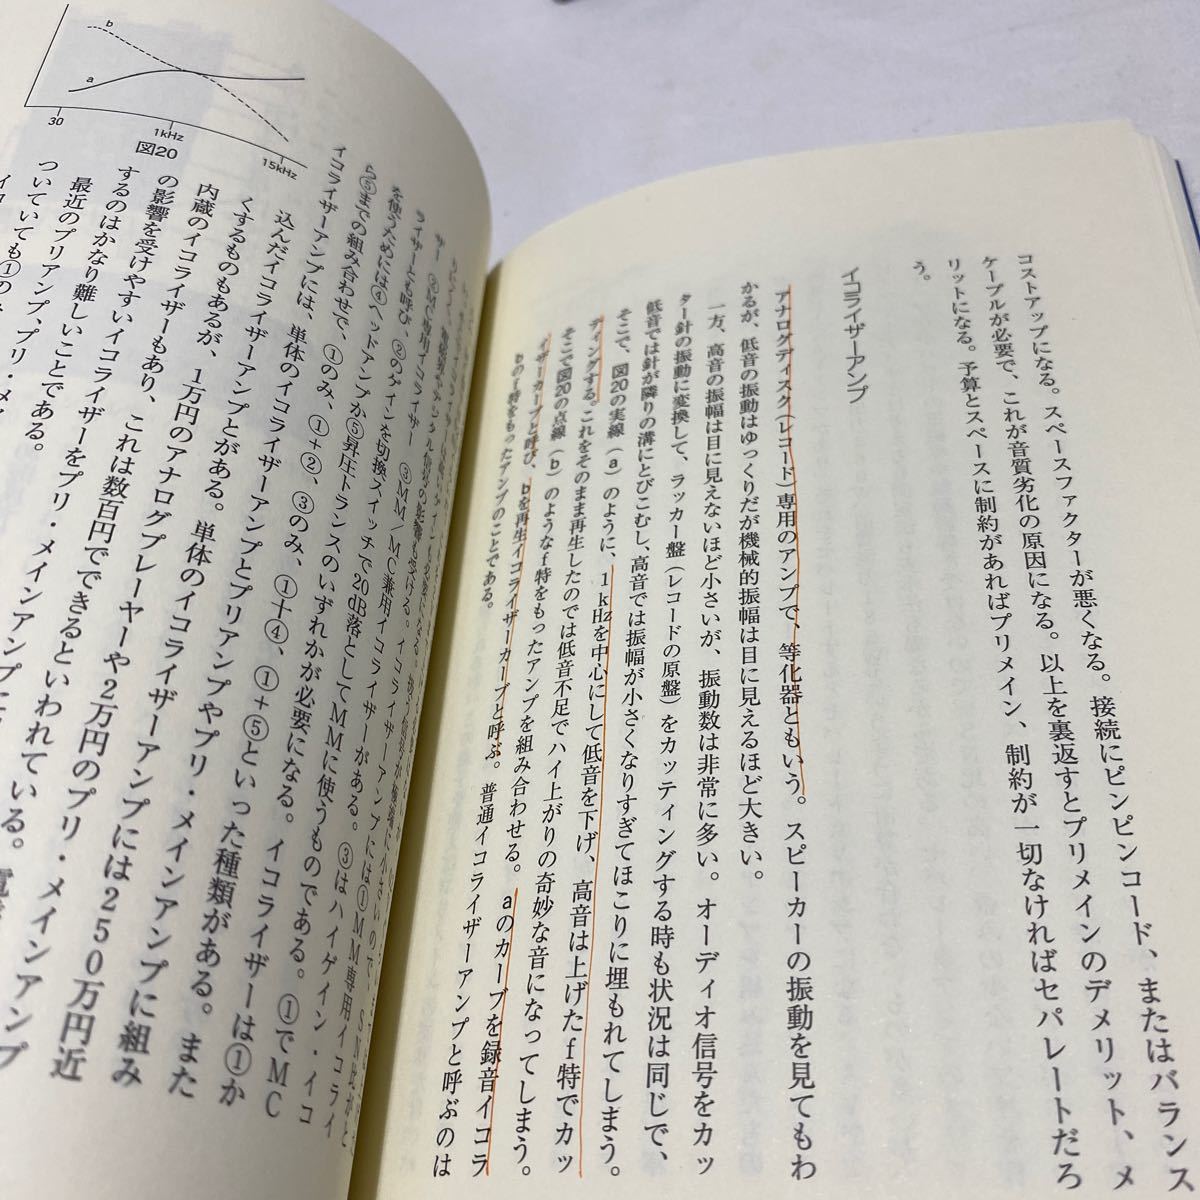  Nagaoka iron man. ... understand audio secondhand book with defect writing Nagaoka iron man music .. company 